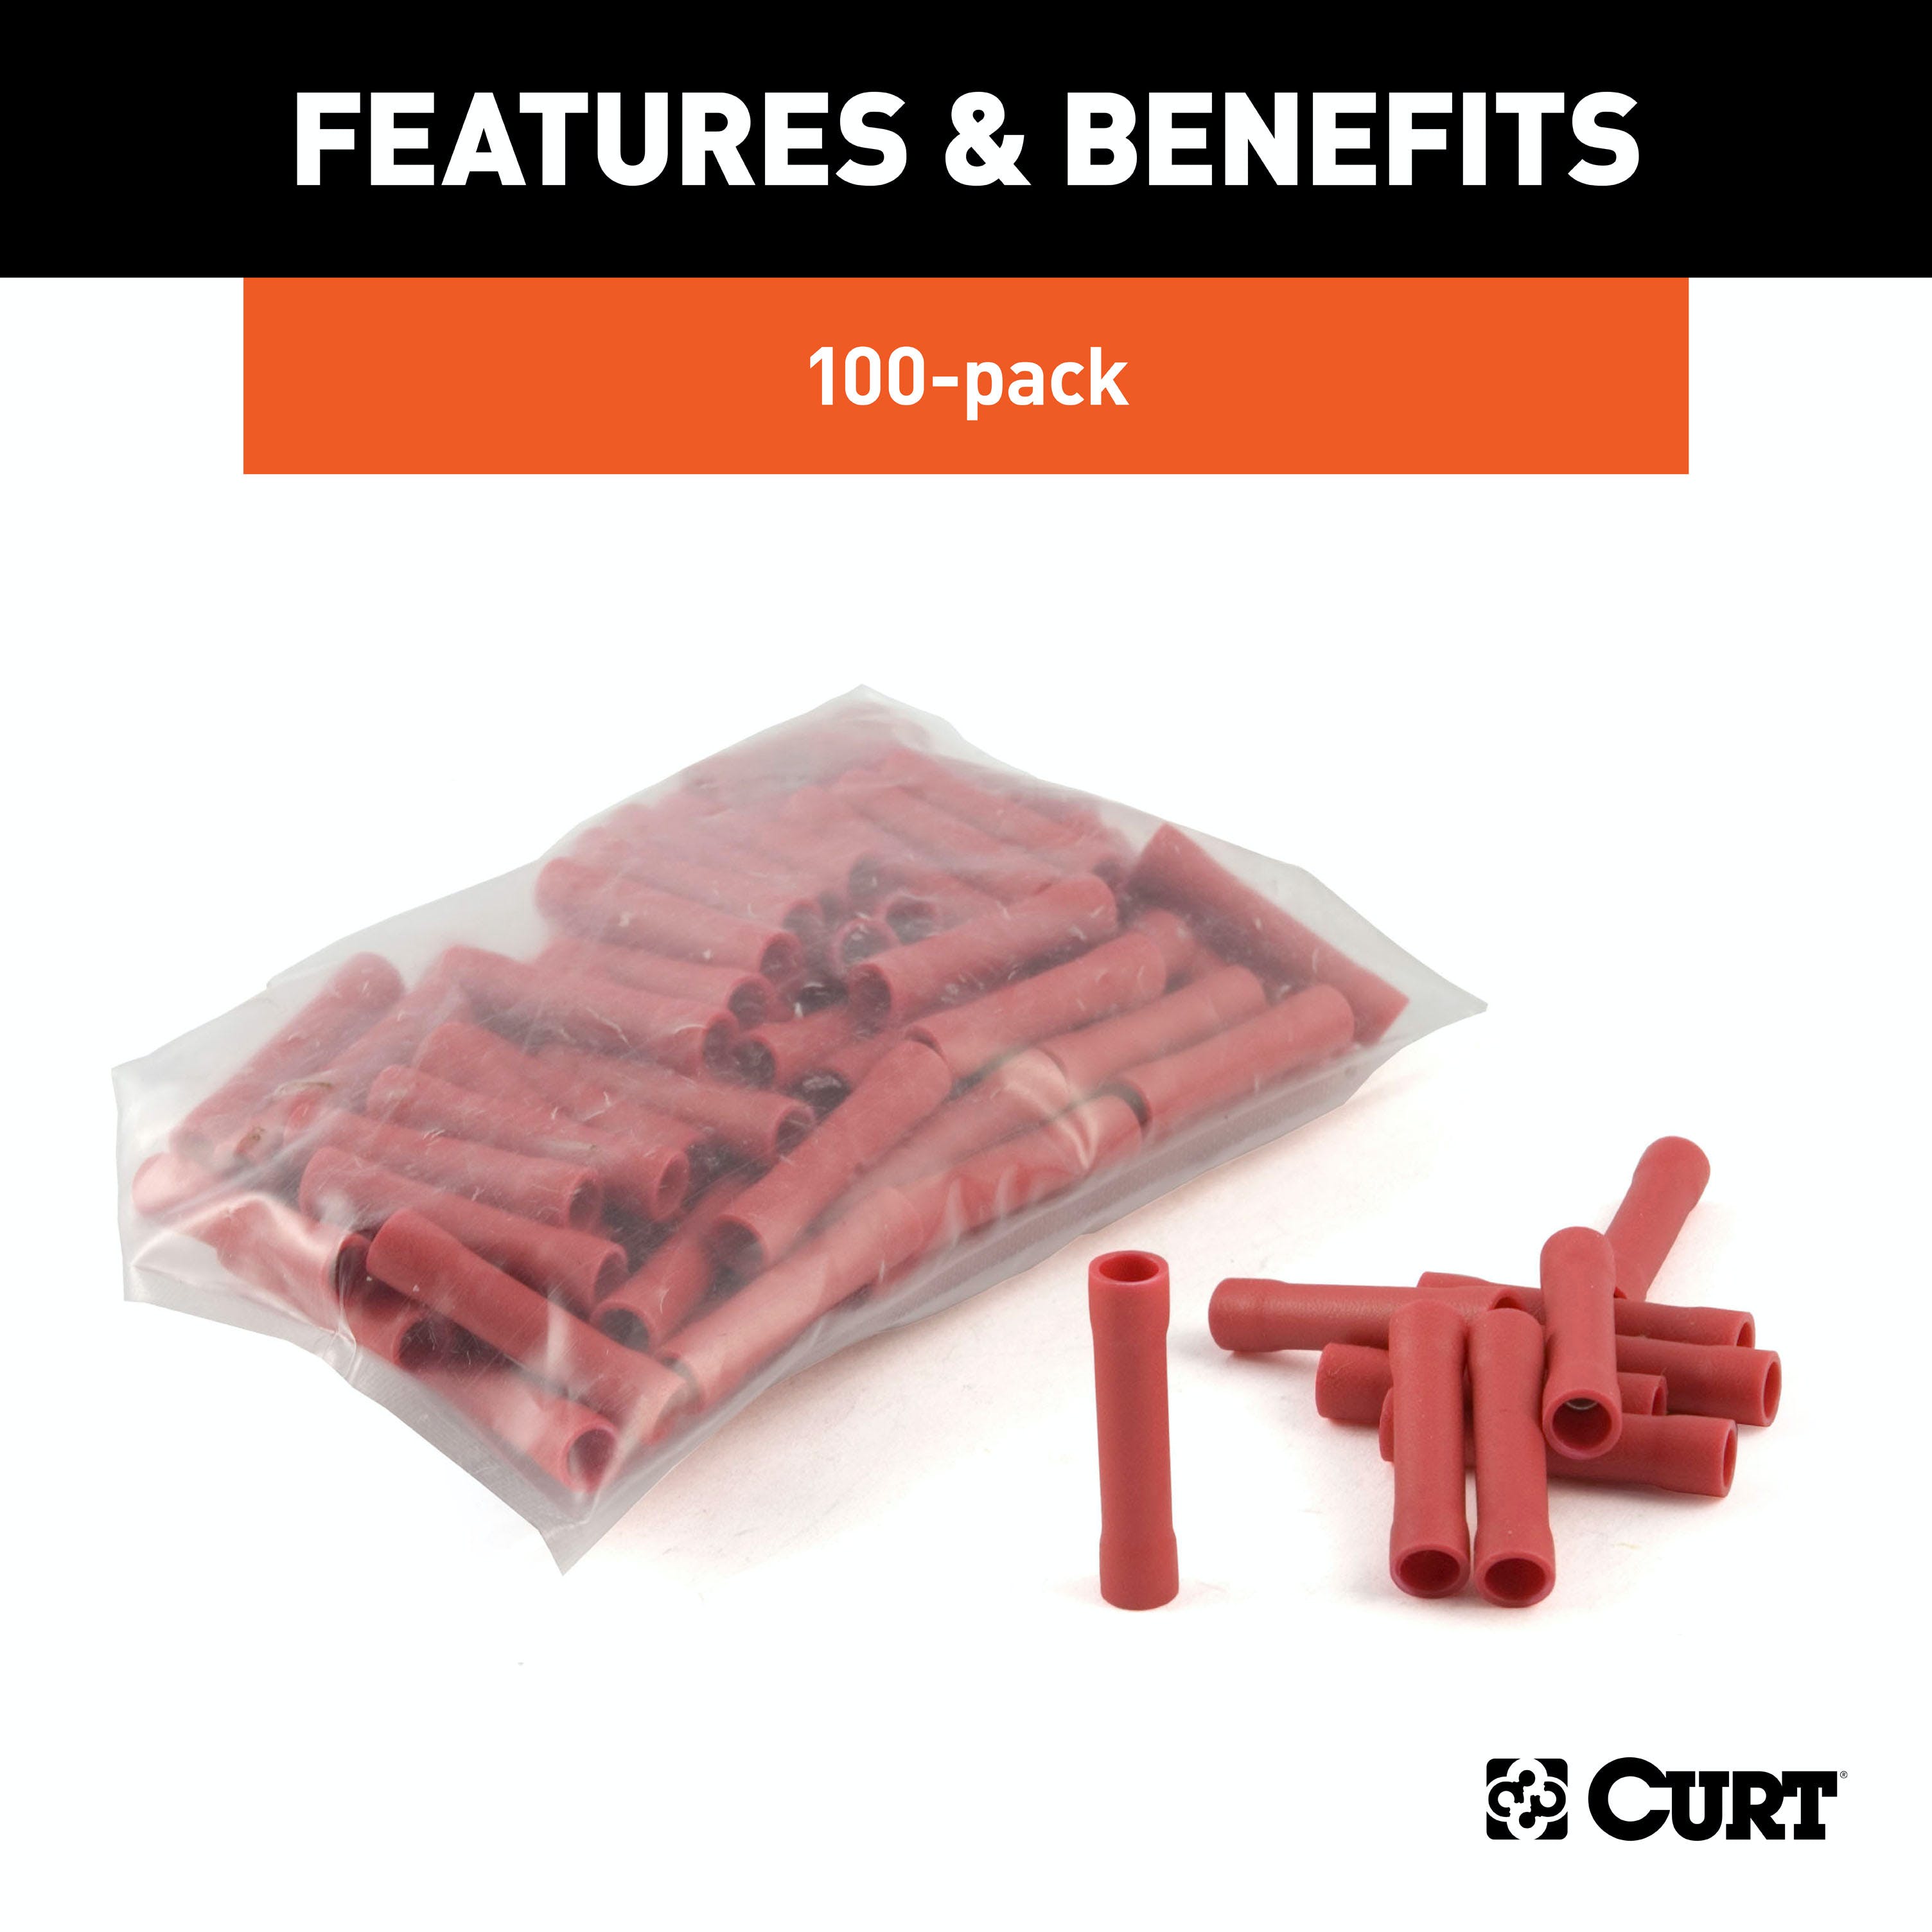 CURT 59421 Butt Connectors (22-18 Wire Gauge, 100-Pack)